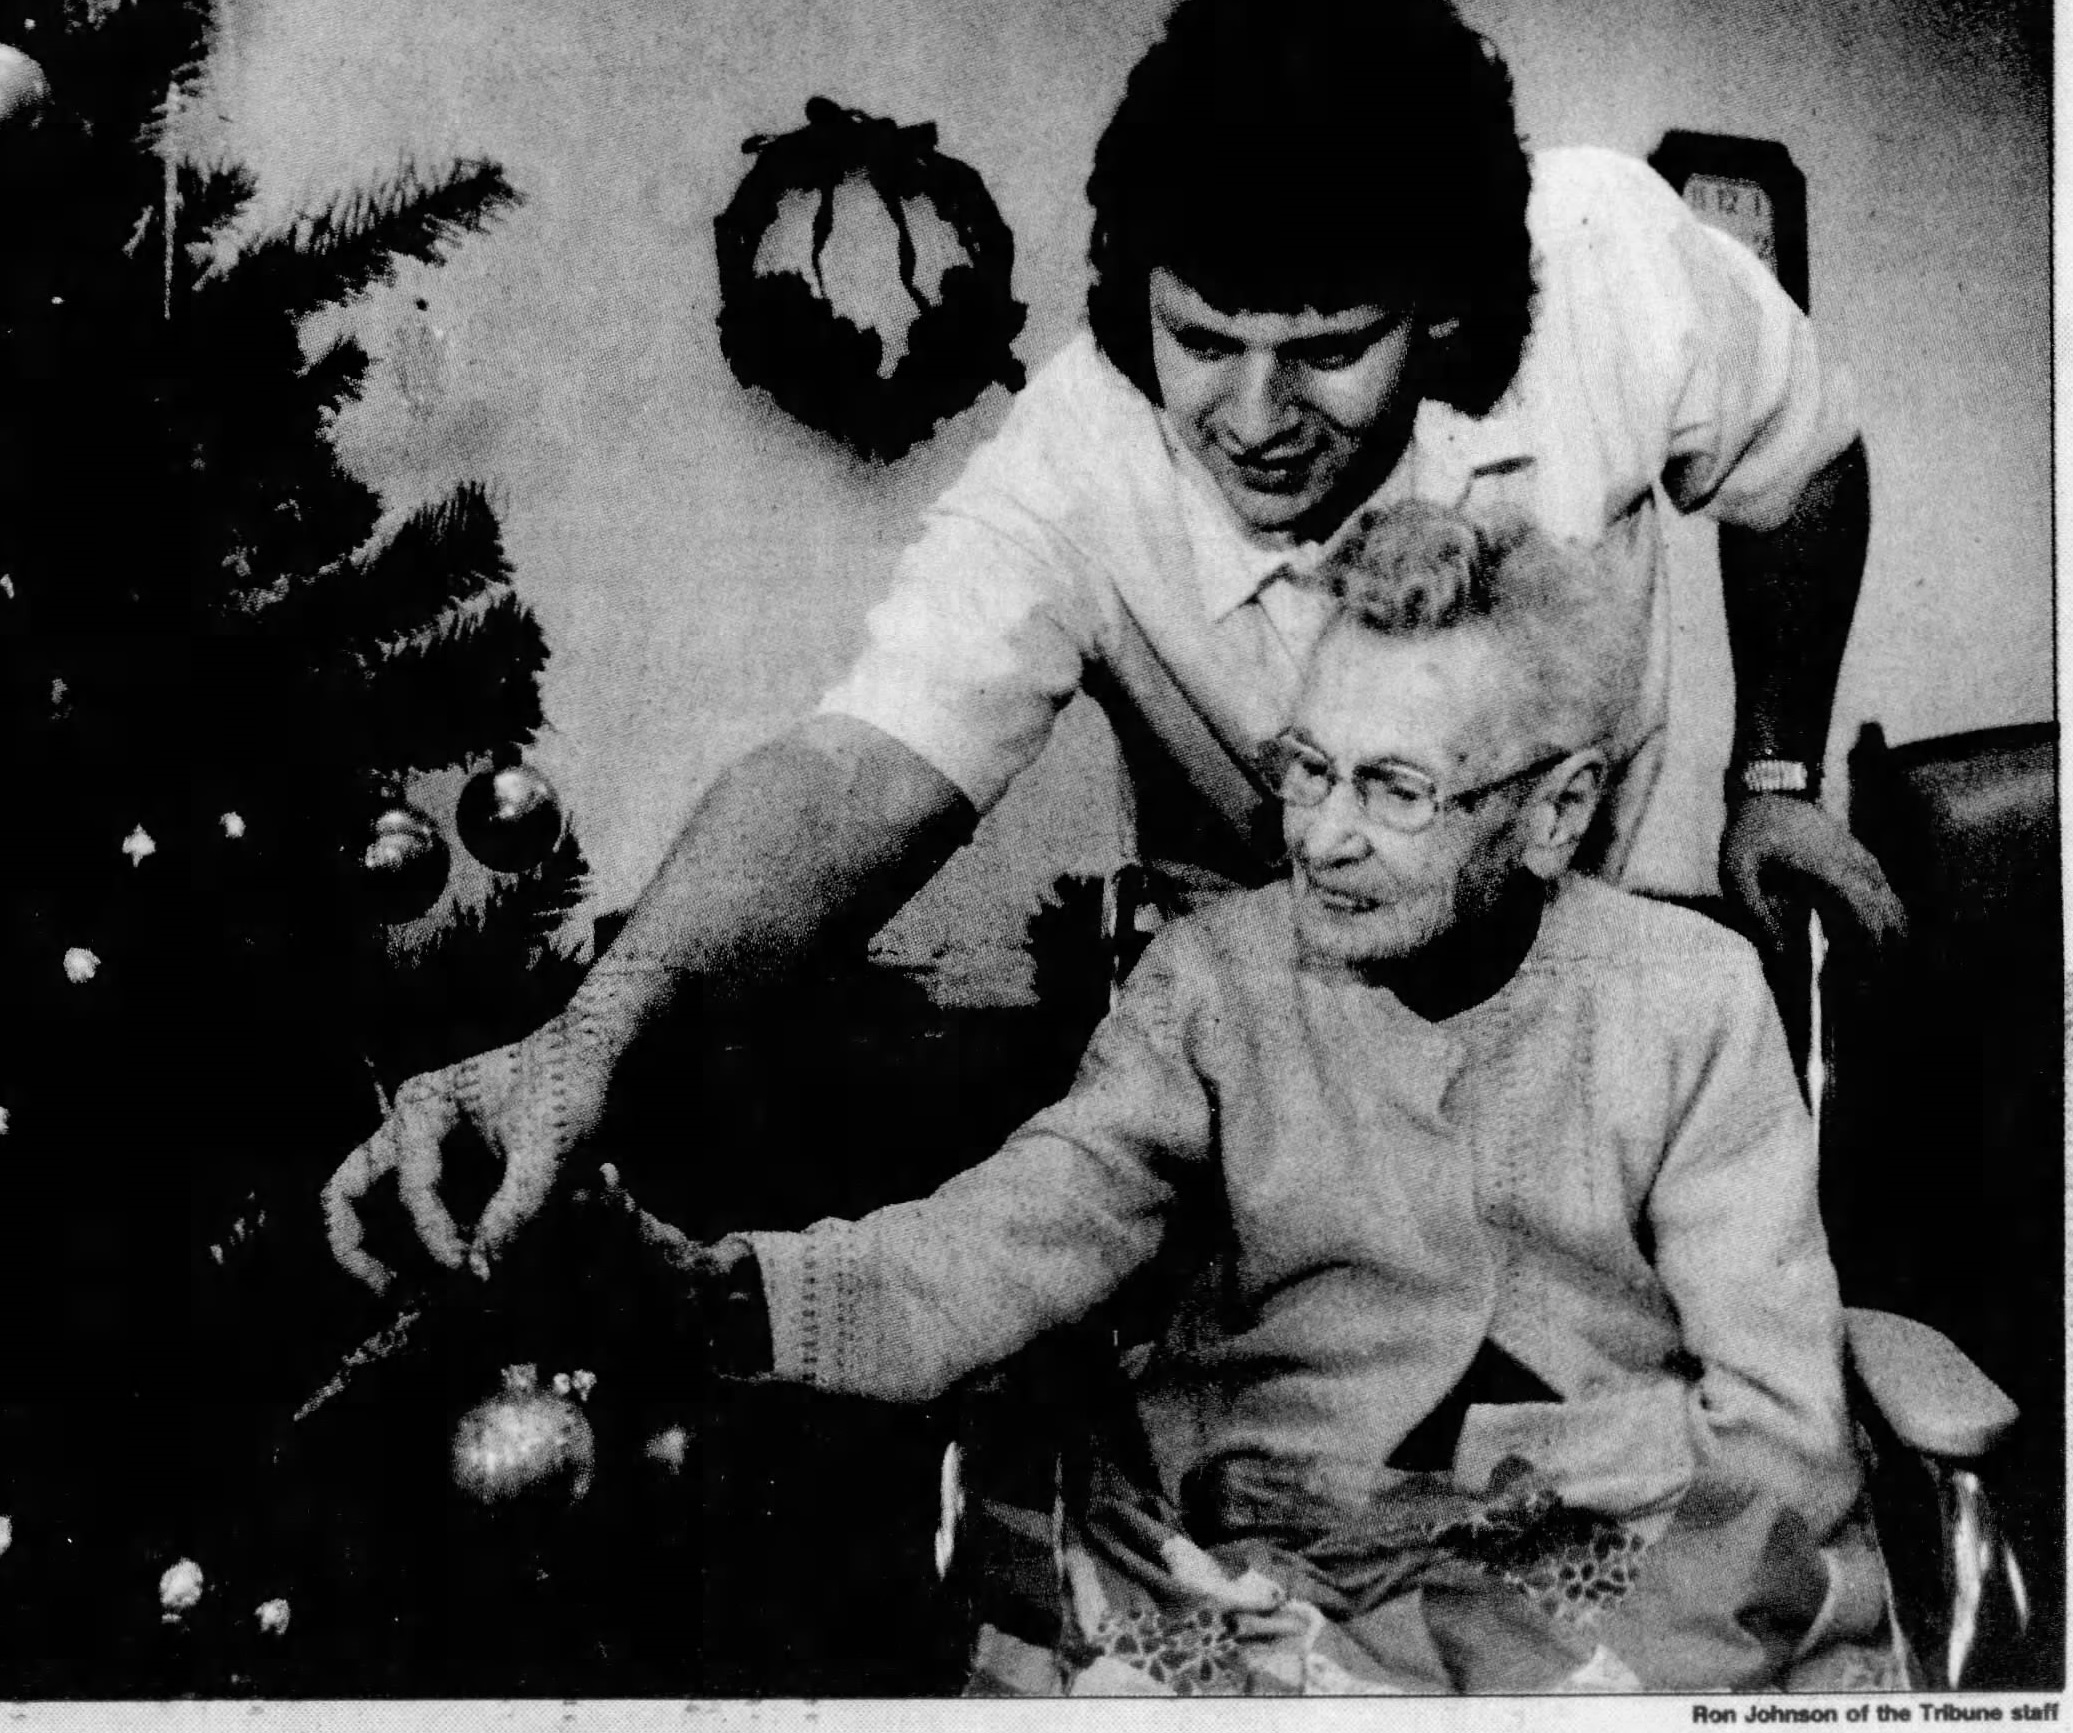 On her 111th birthday in December 1989. (Source: The La Crosse Tribune, 18 December 1989)